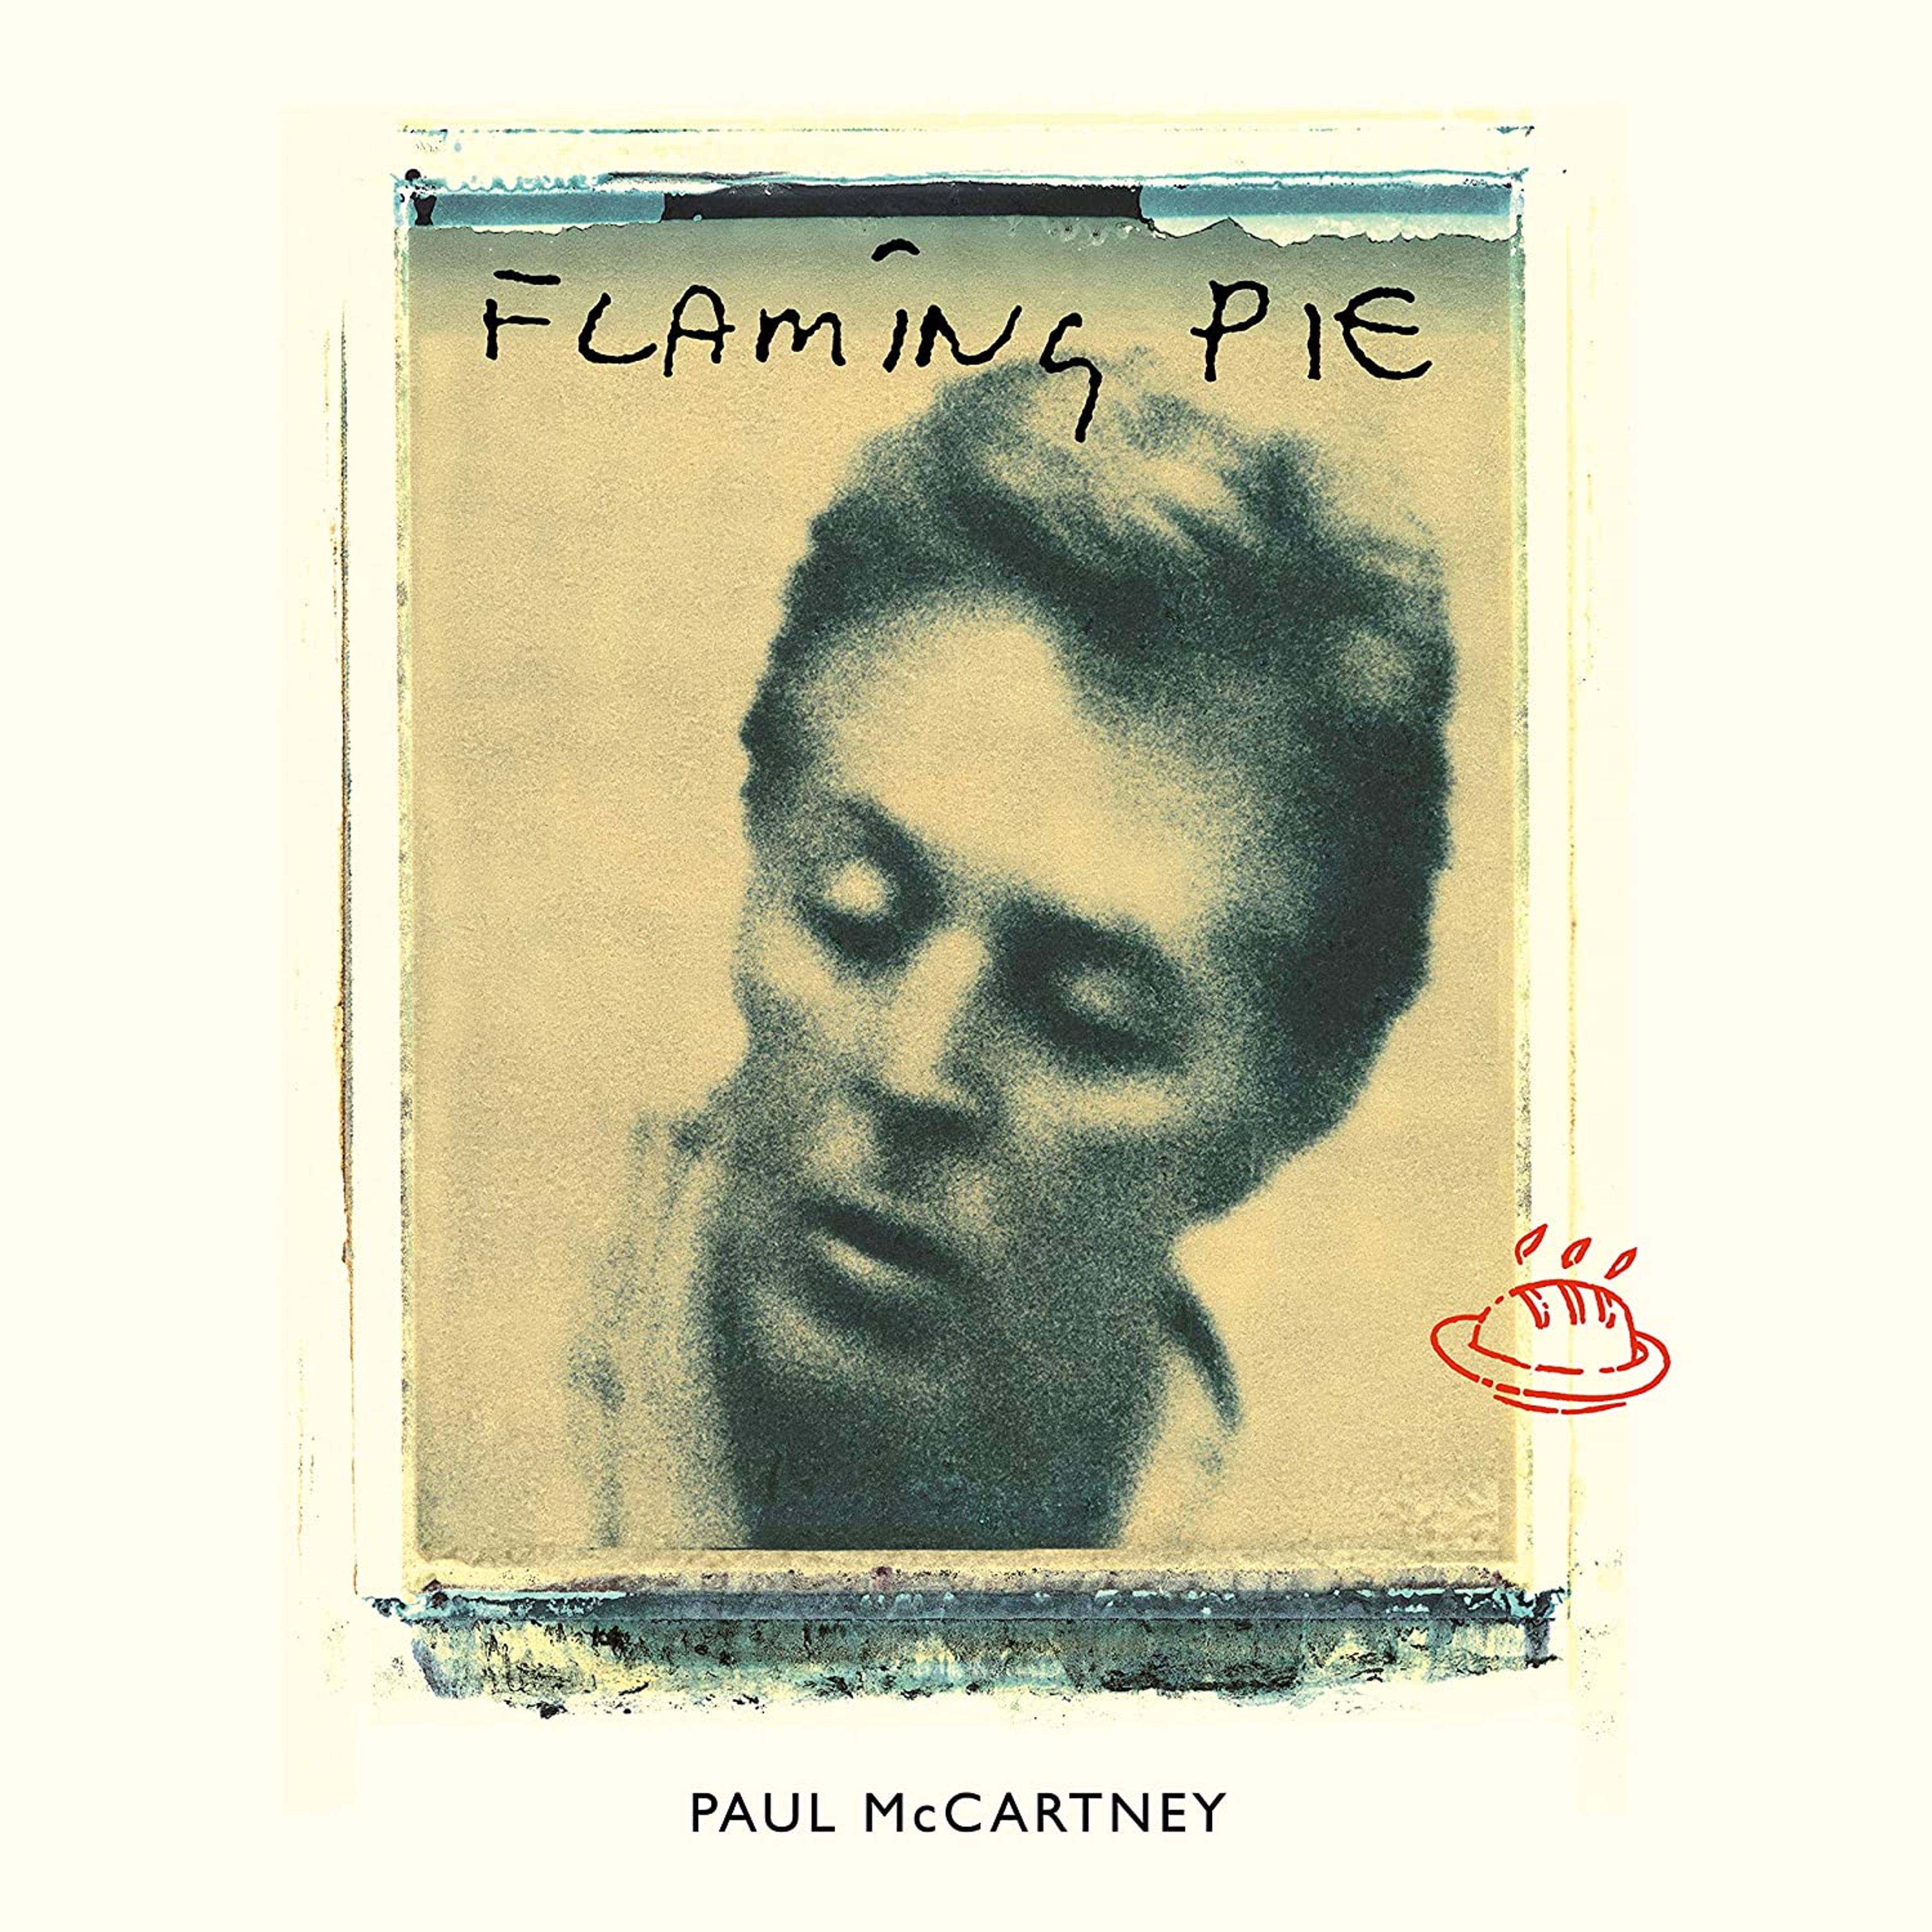 Album Sleeve for 'Flaming Pie'